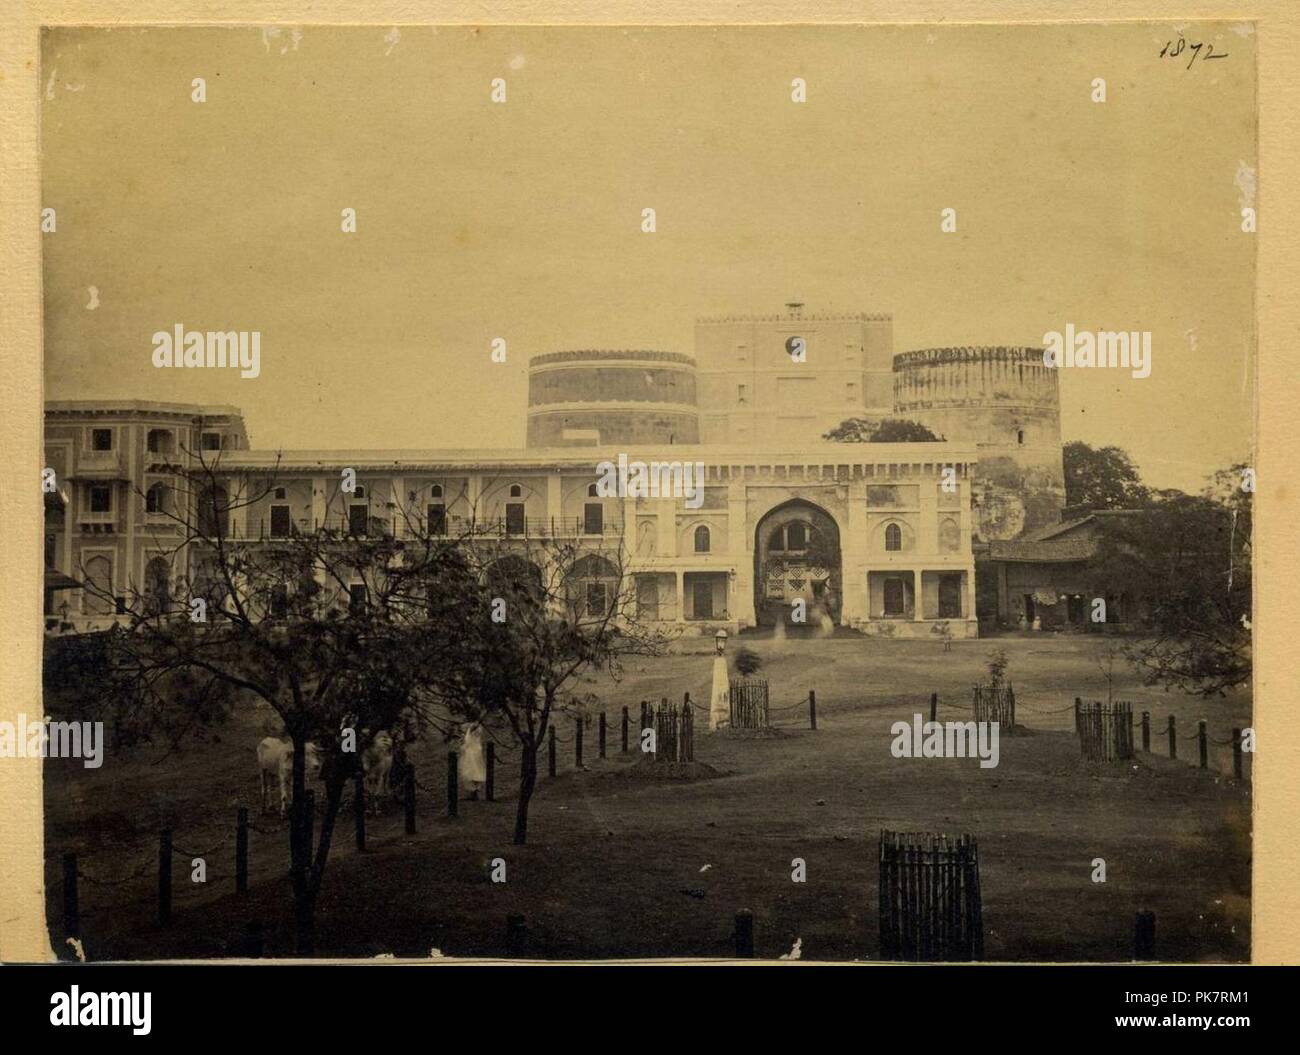 Bhadra Fort in Ahmedabad, Gujarat, India - 1872. Stock Photo